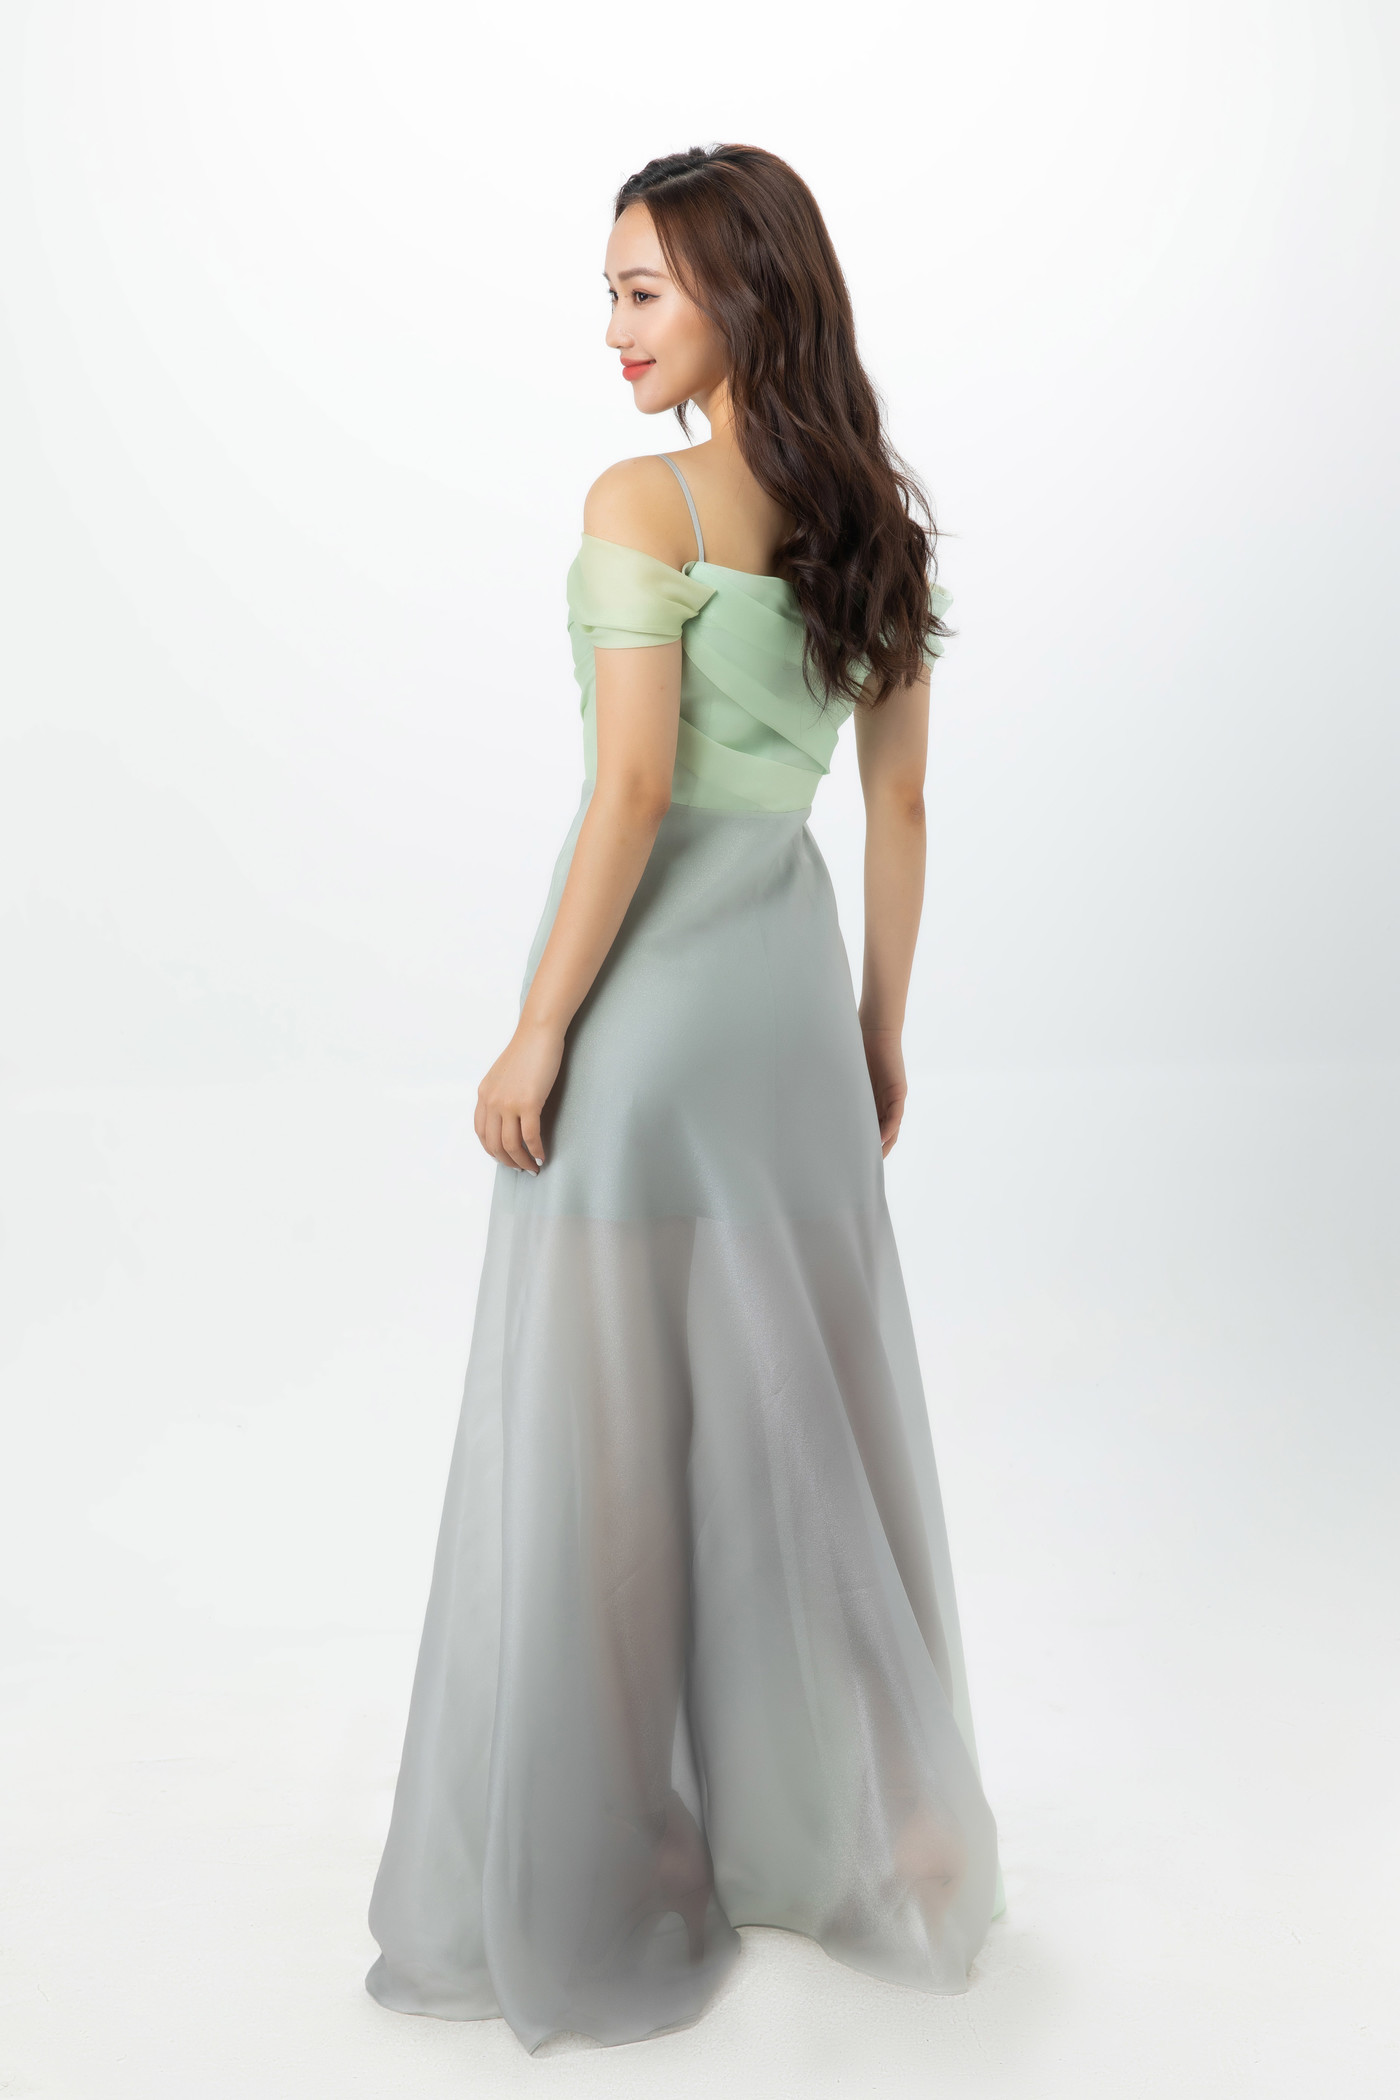 Olwen Dress - Đầm dạ hội lụa trễ vai 